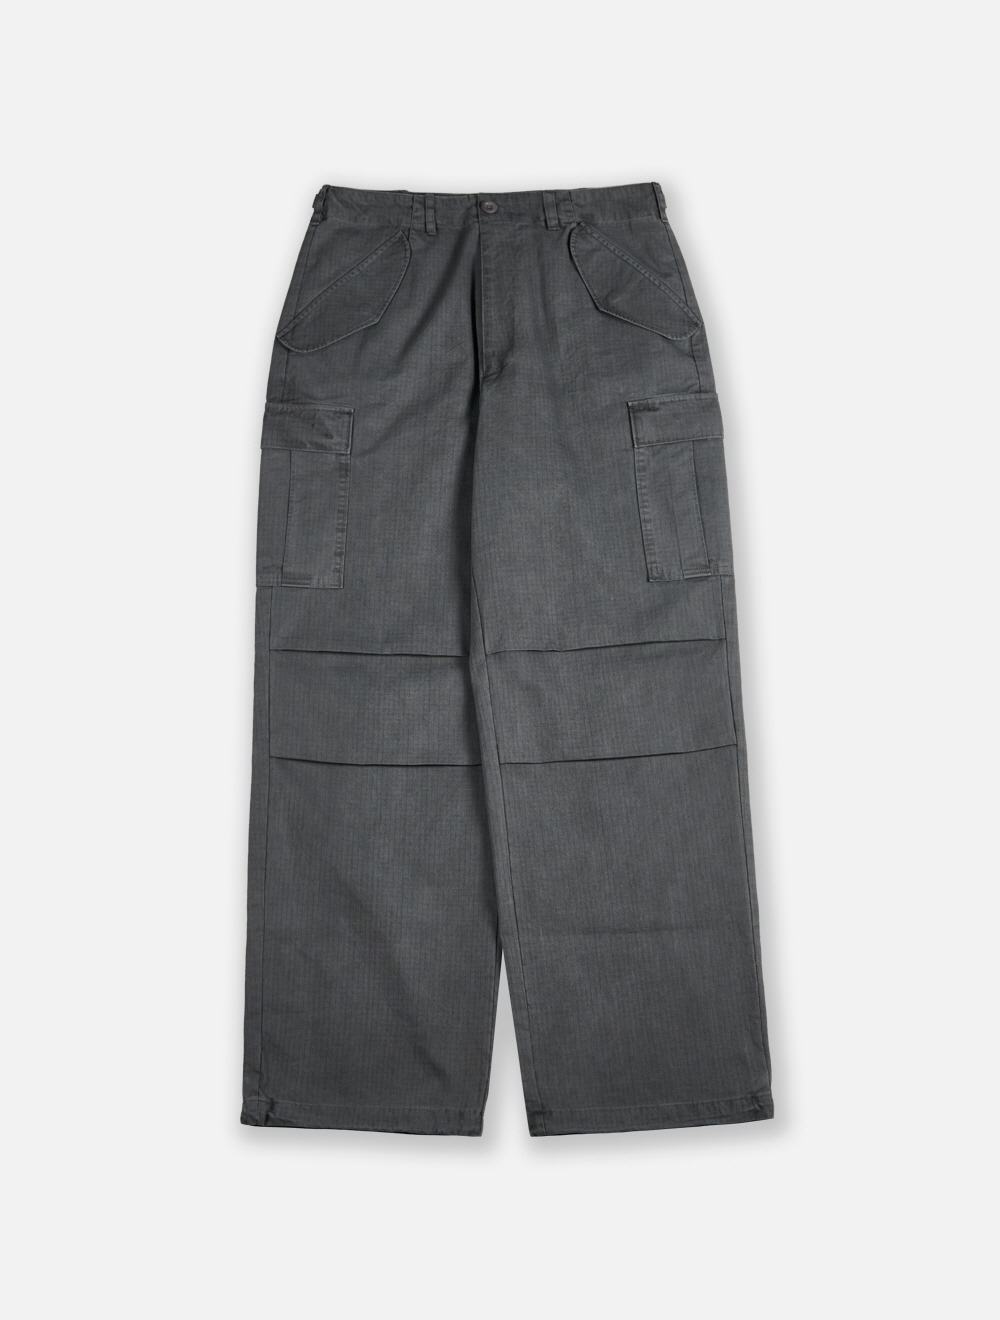 M-65 pants_sliver gray